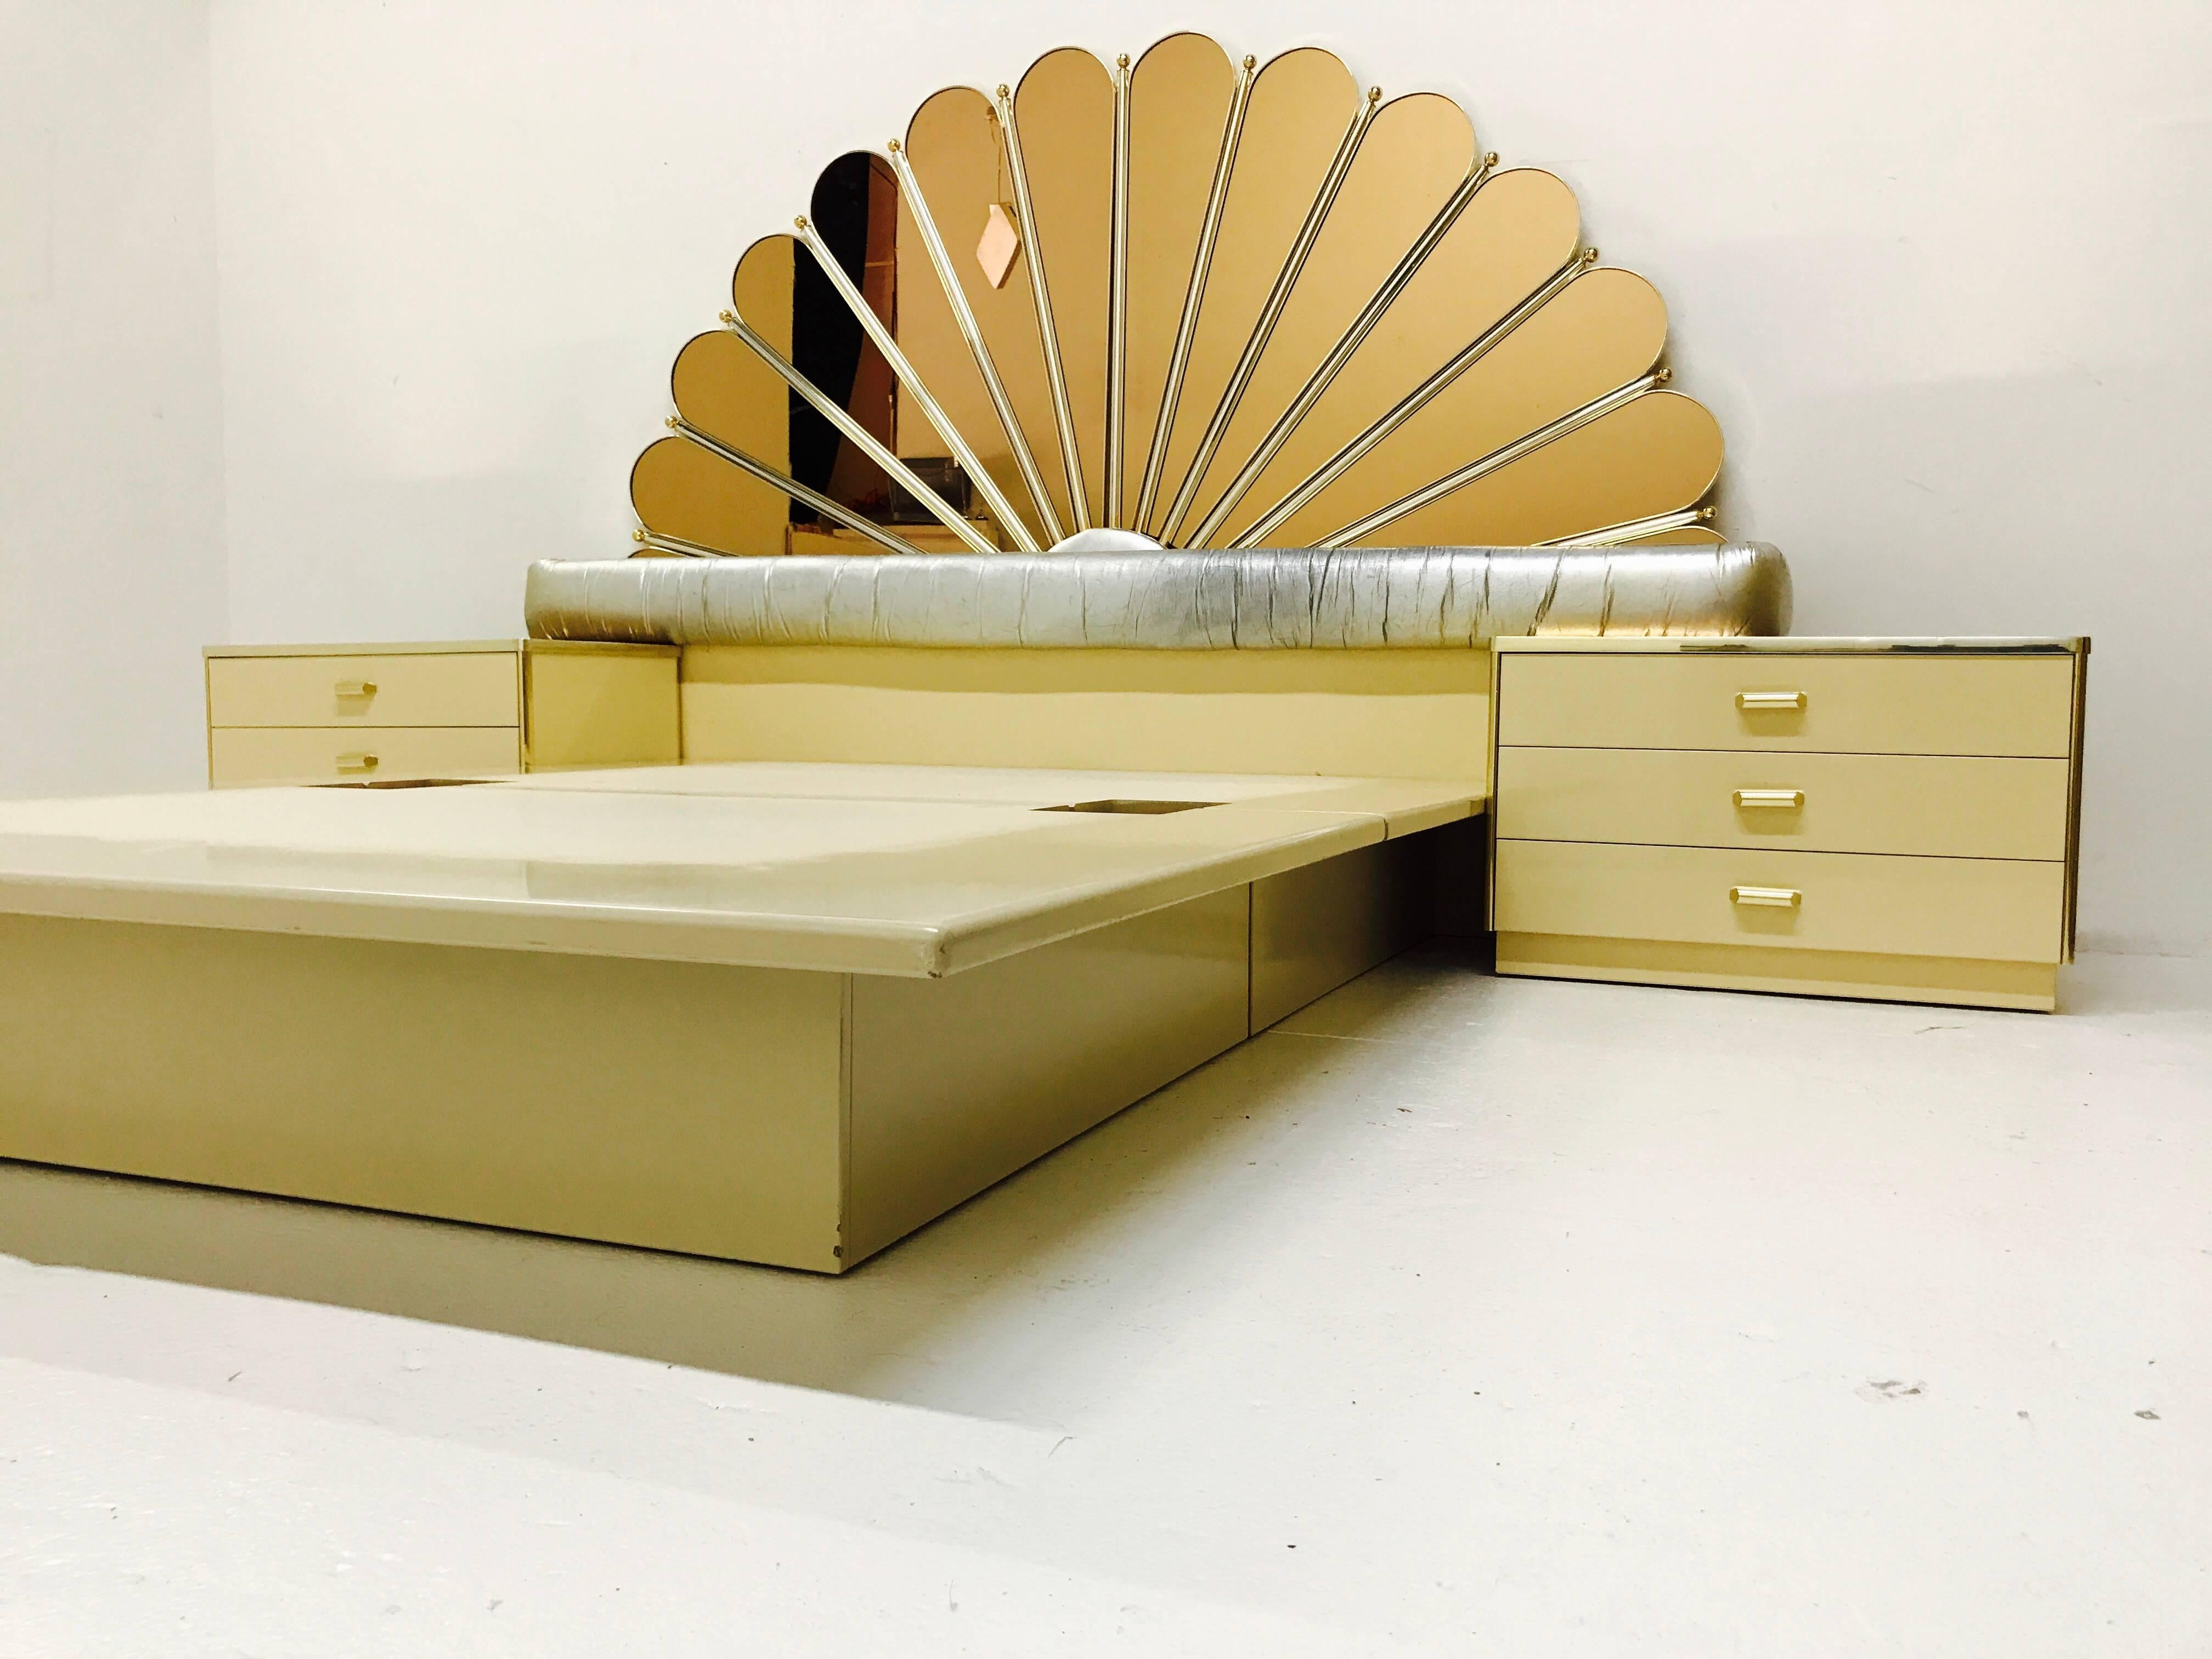 Bronze mirrored queen platform bed and nightstands by Rougier. Headboard has a 10